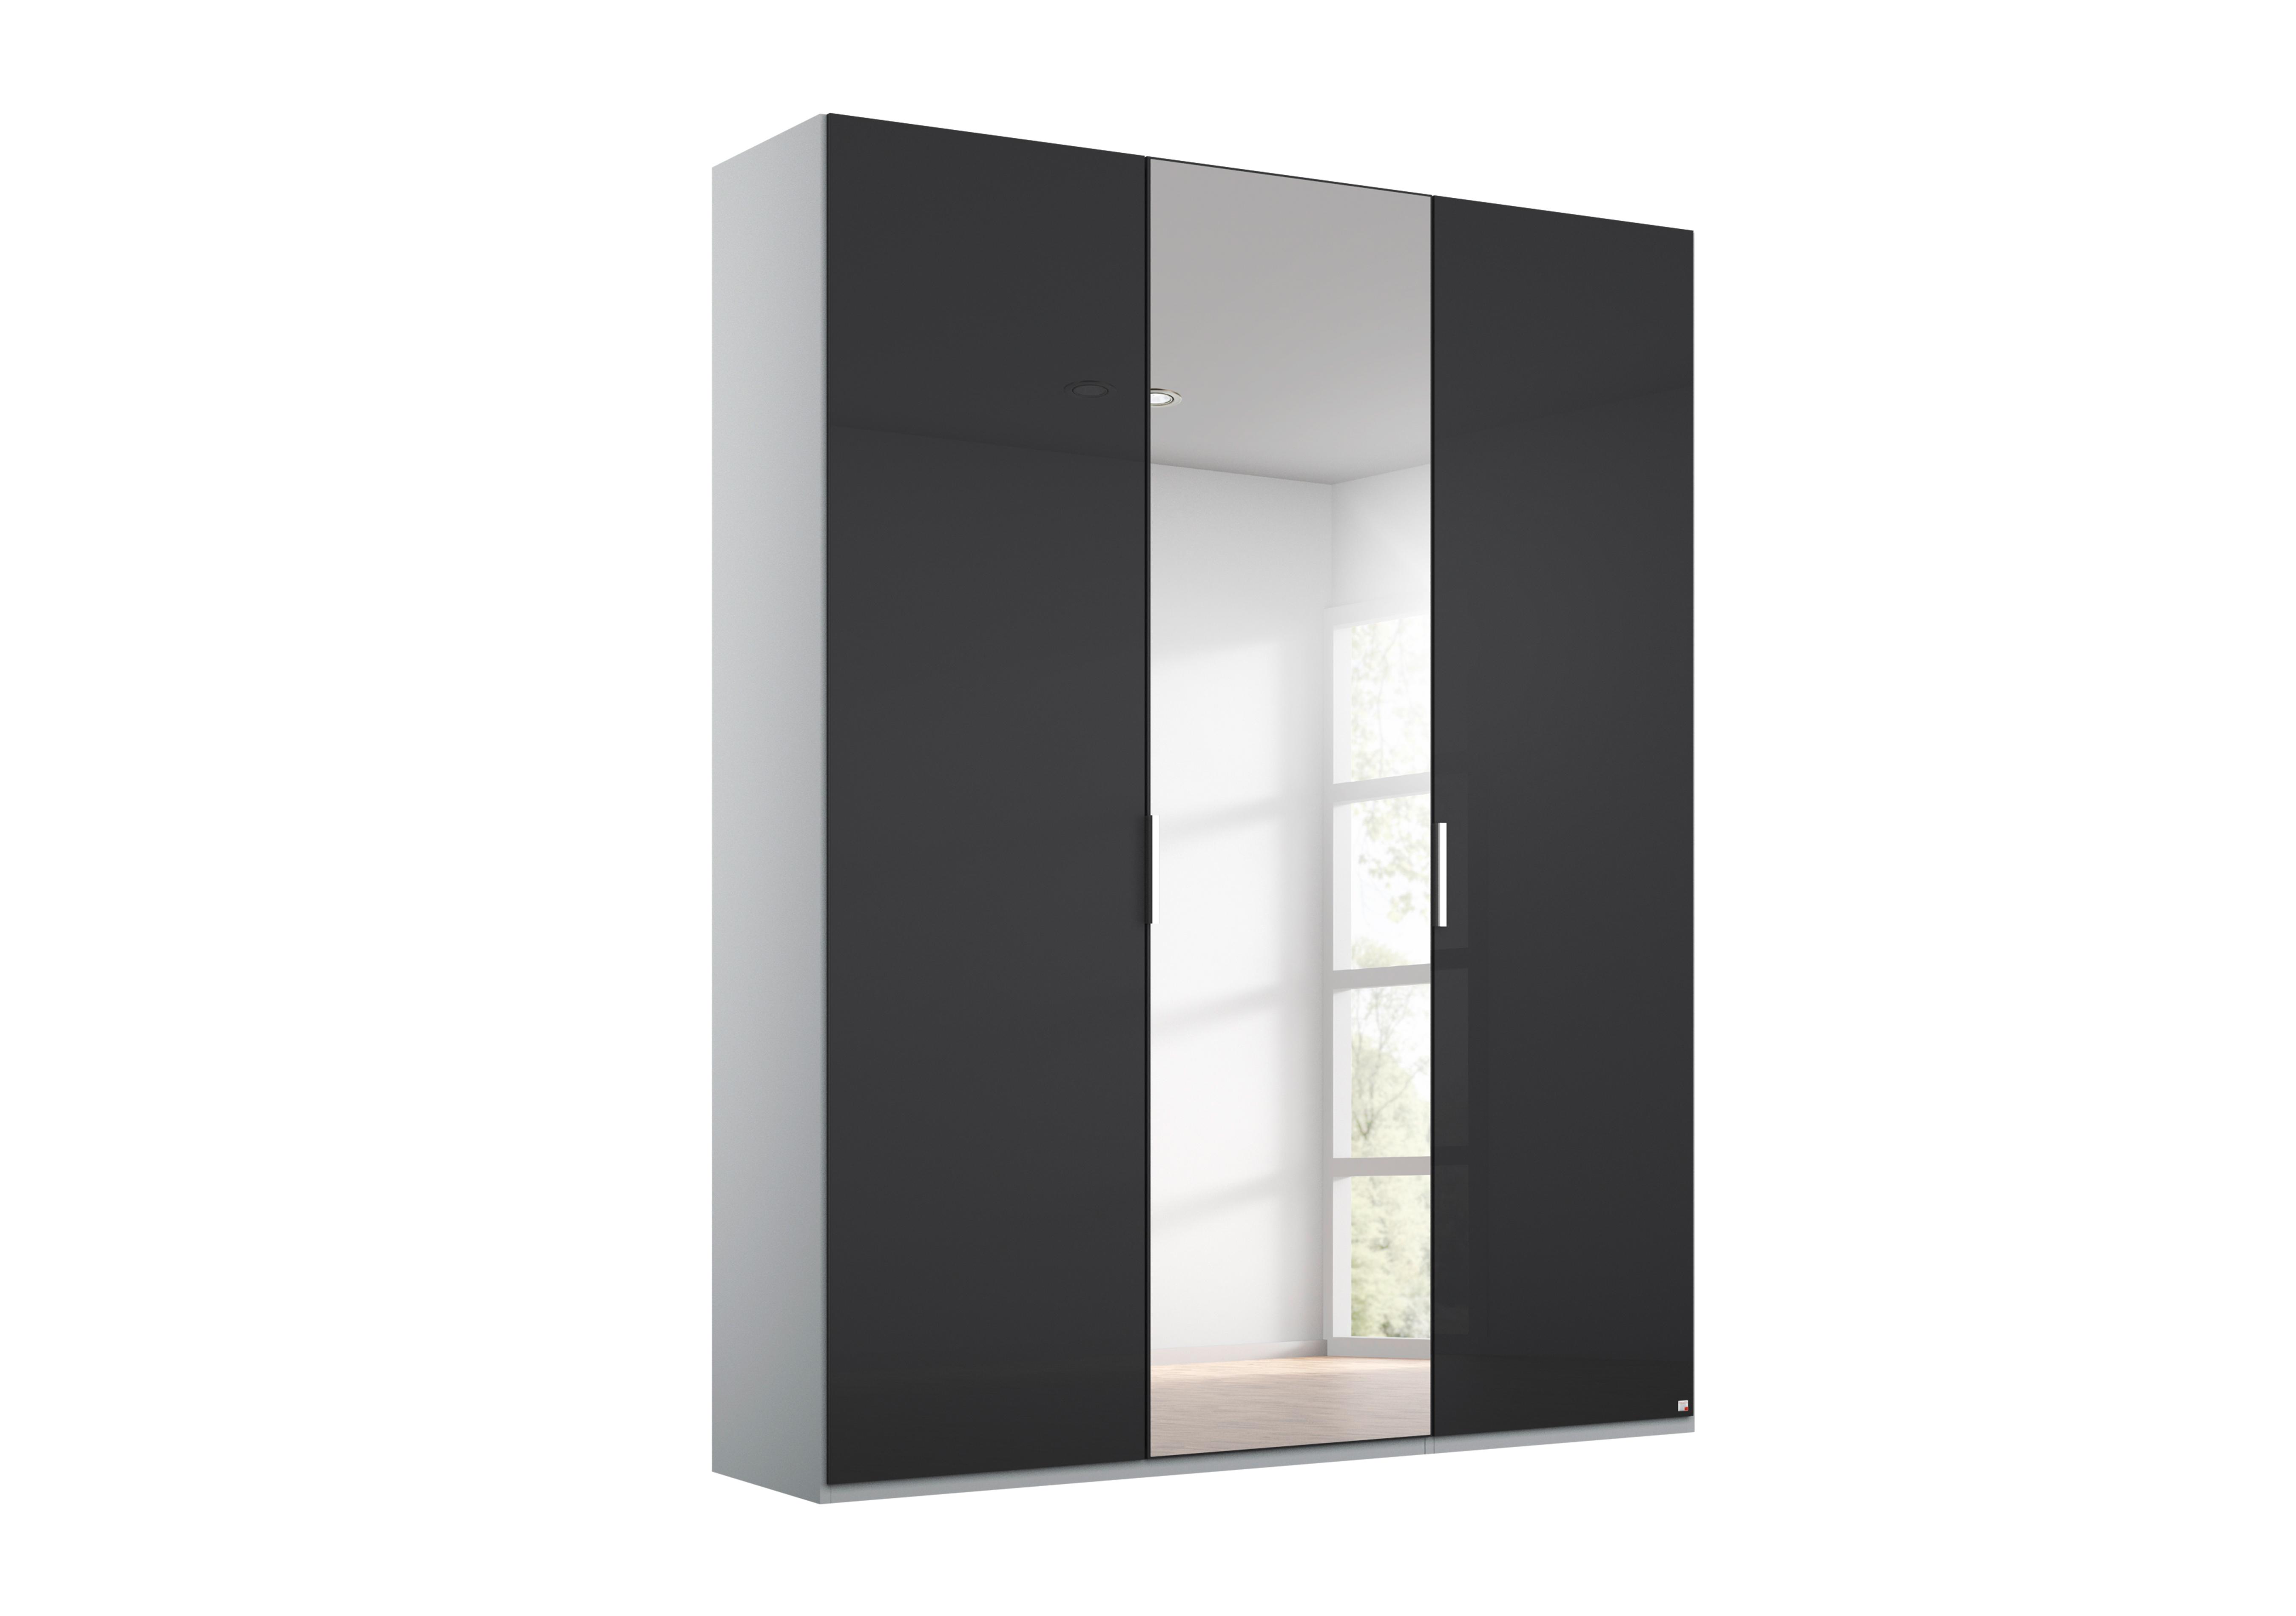 Formes Glass 3 Door Hinged Wardrobe with 1 Mirror in A144b Silk Grey Basalt Front on Furniture Village